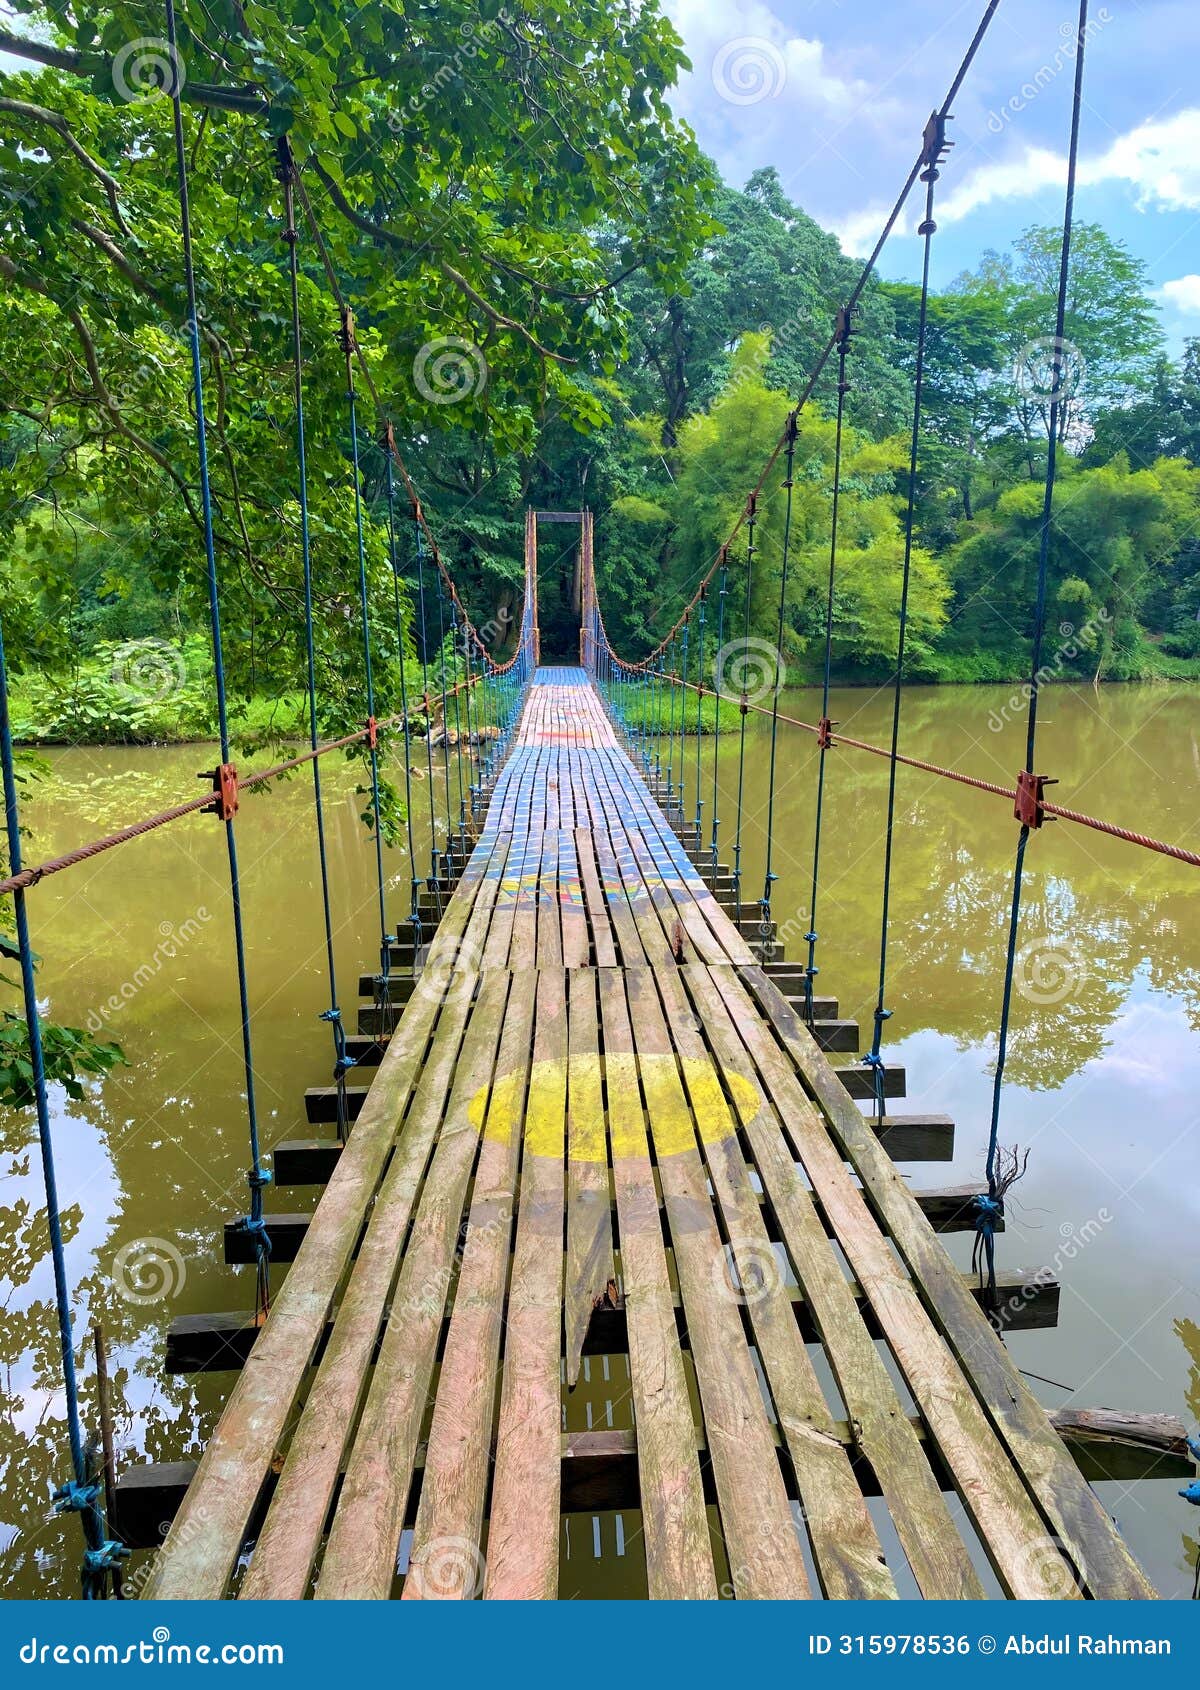 a suspension bridge over a river connects two lands